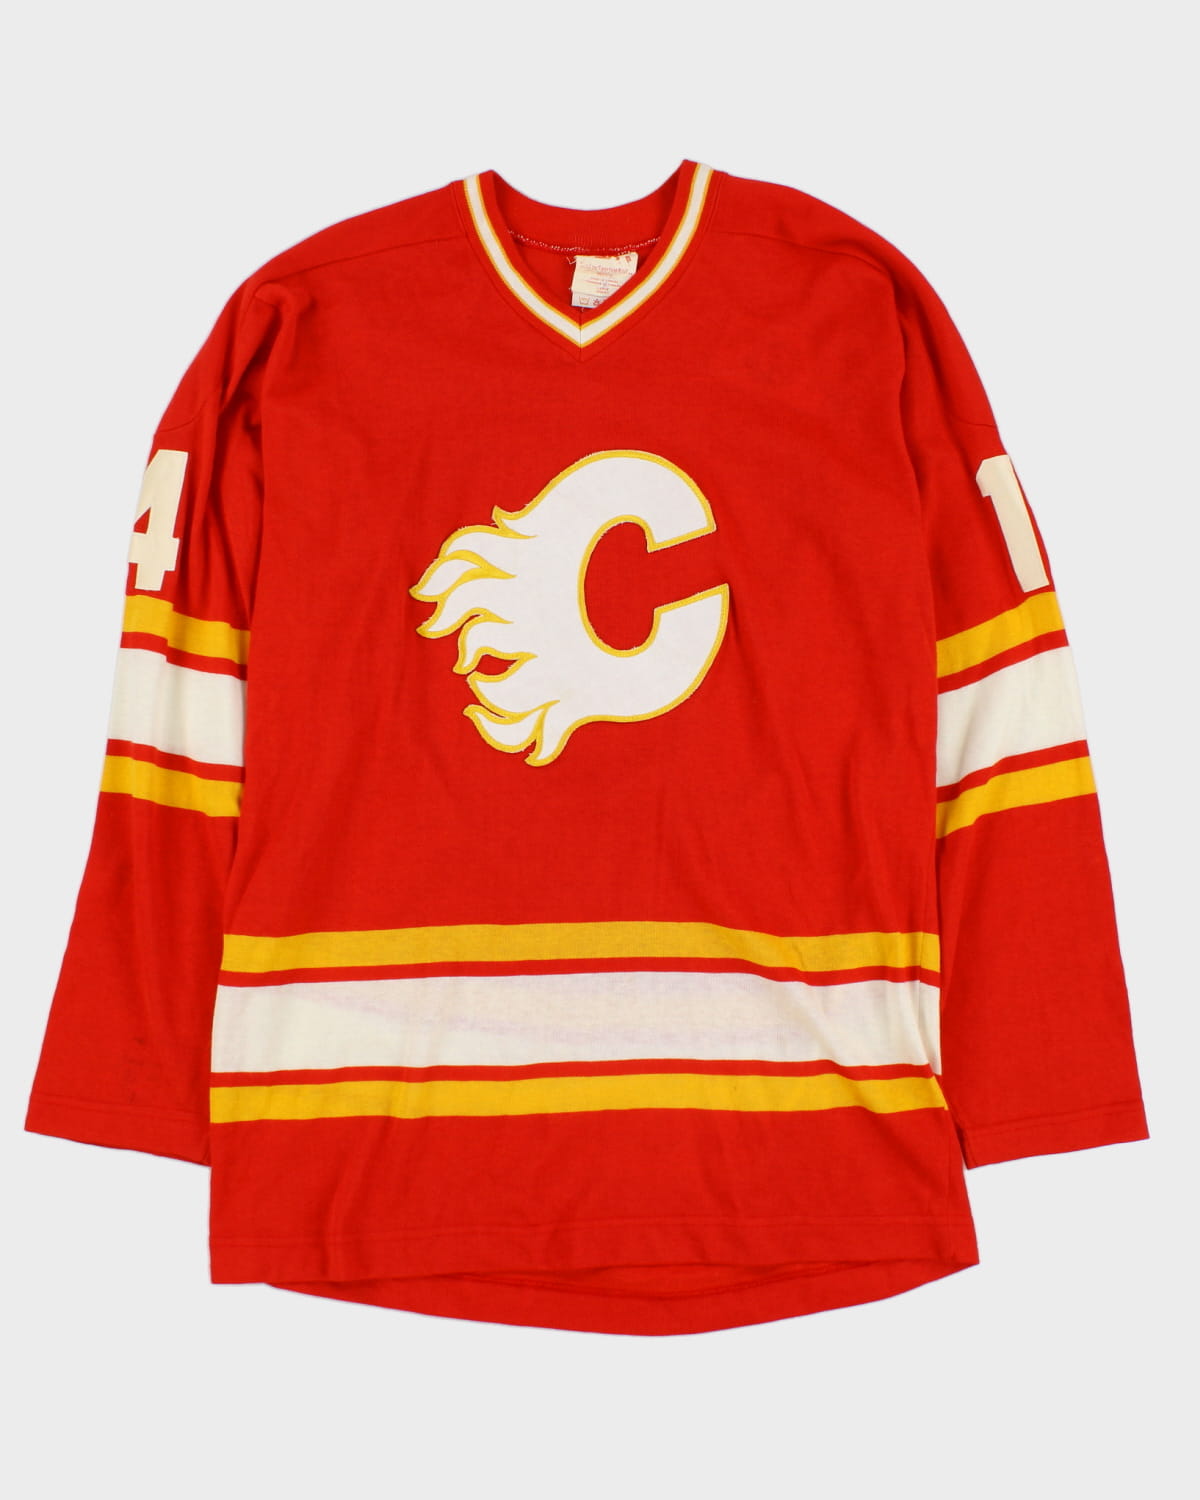 Vintage 80s NHL x Calgary Flames #14 Hockey Jersey - L